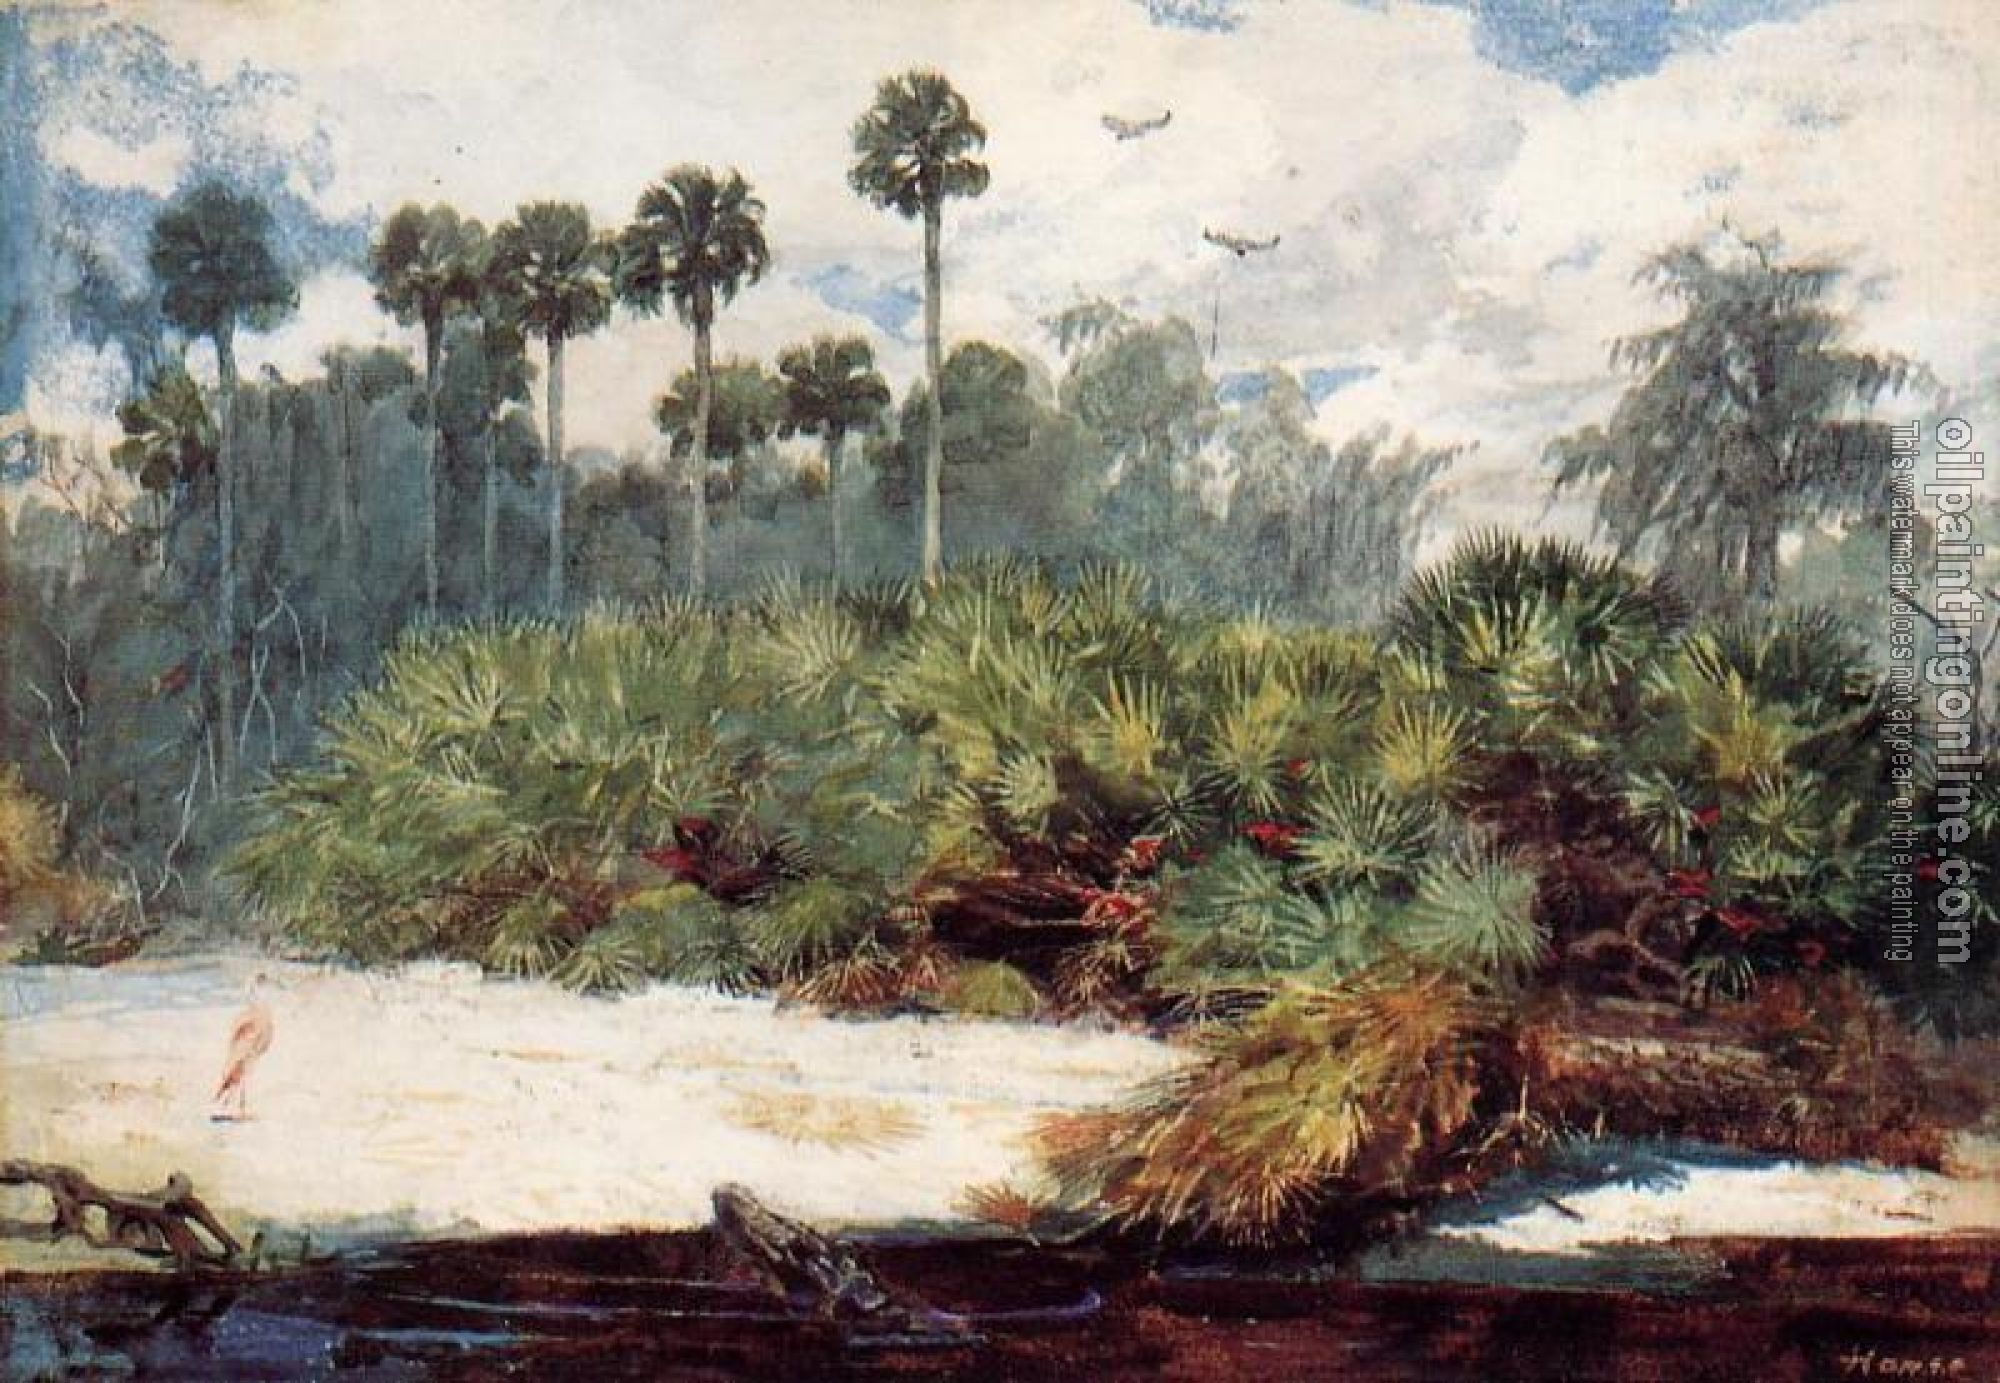 Homer, Winslow - In a Florida Jungle